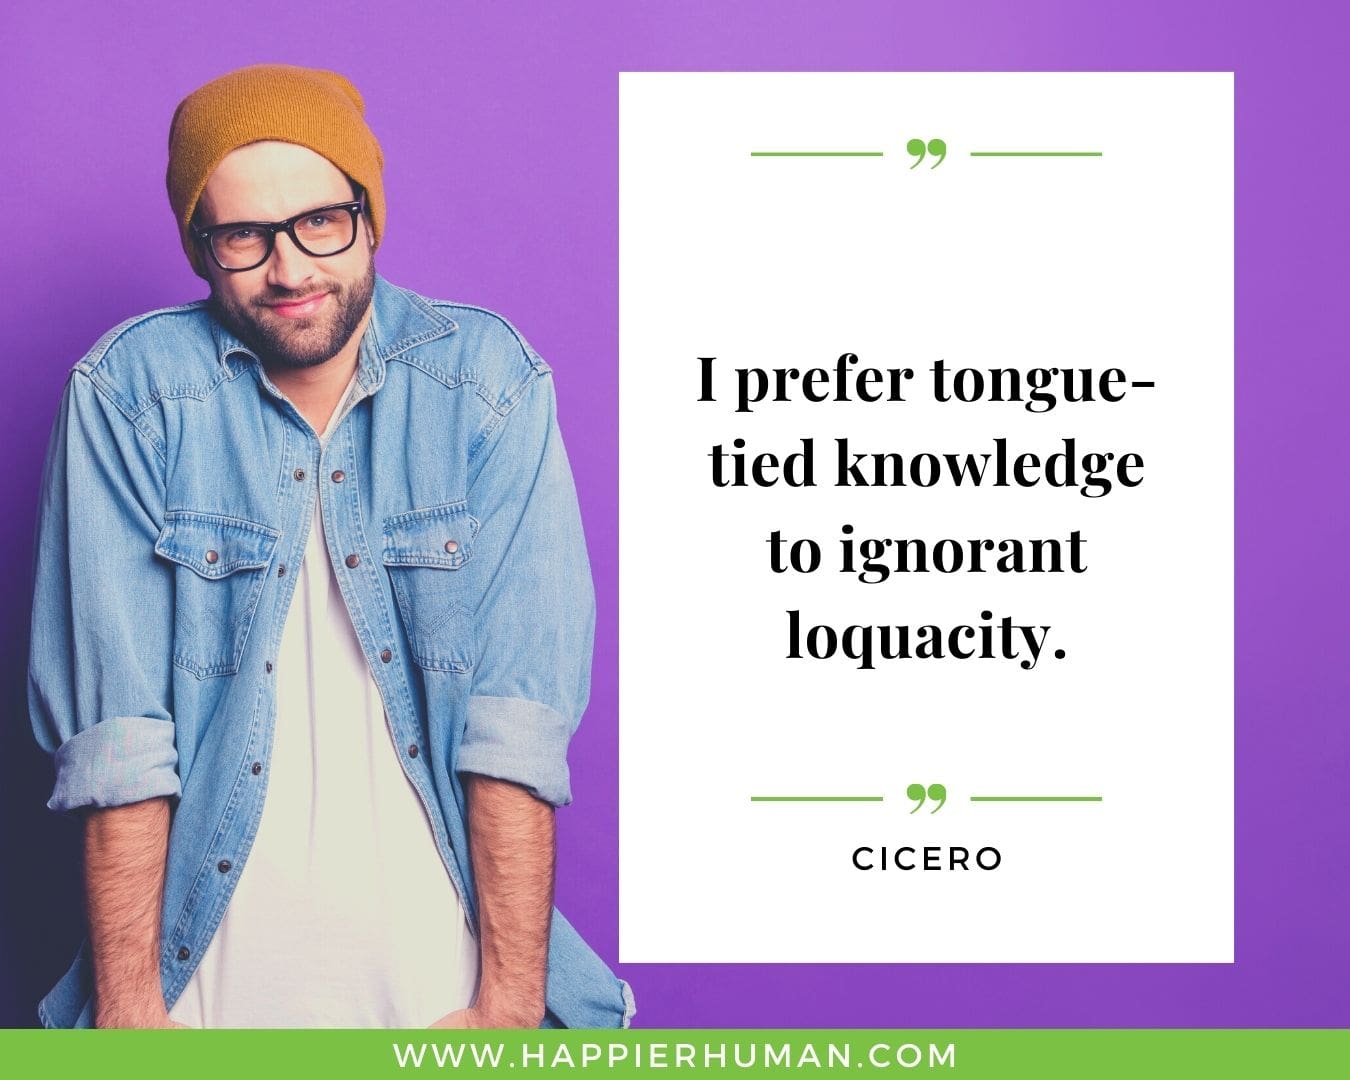 Introvert Quotes - “I prefer tongue-tied knowledge to ignorant loquacity.” – Cicero